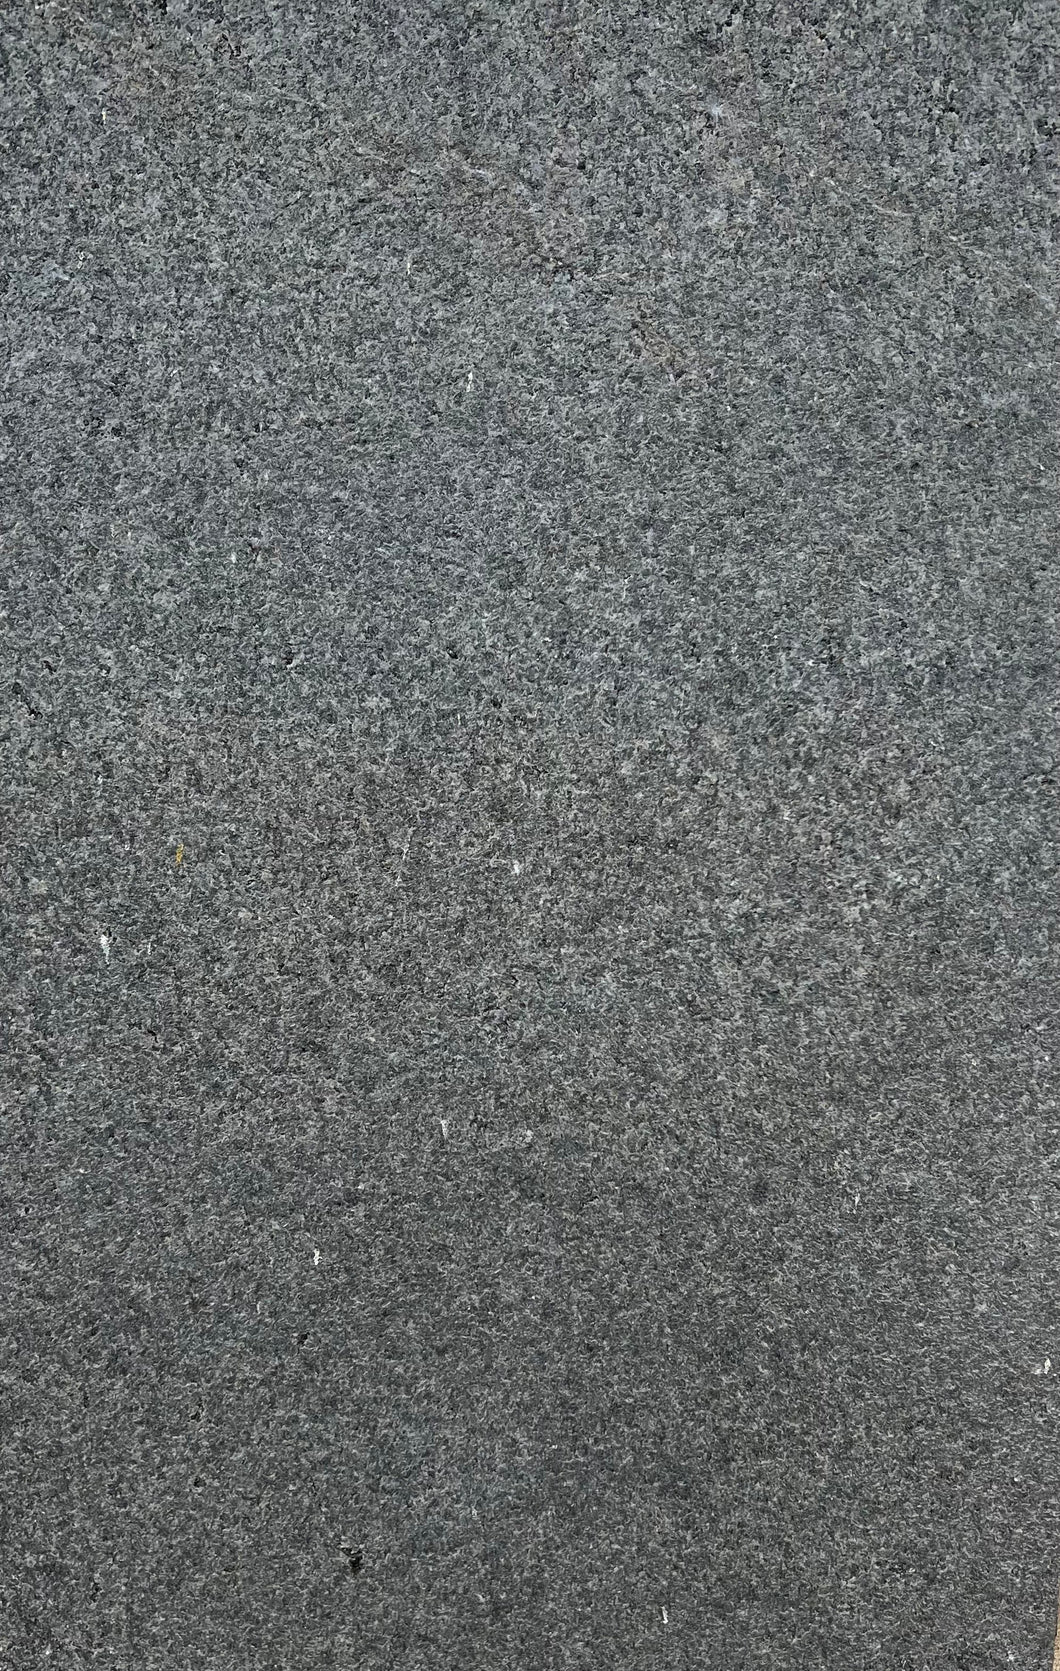 Granite - Carbon Black